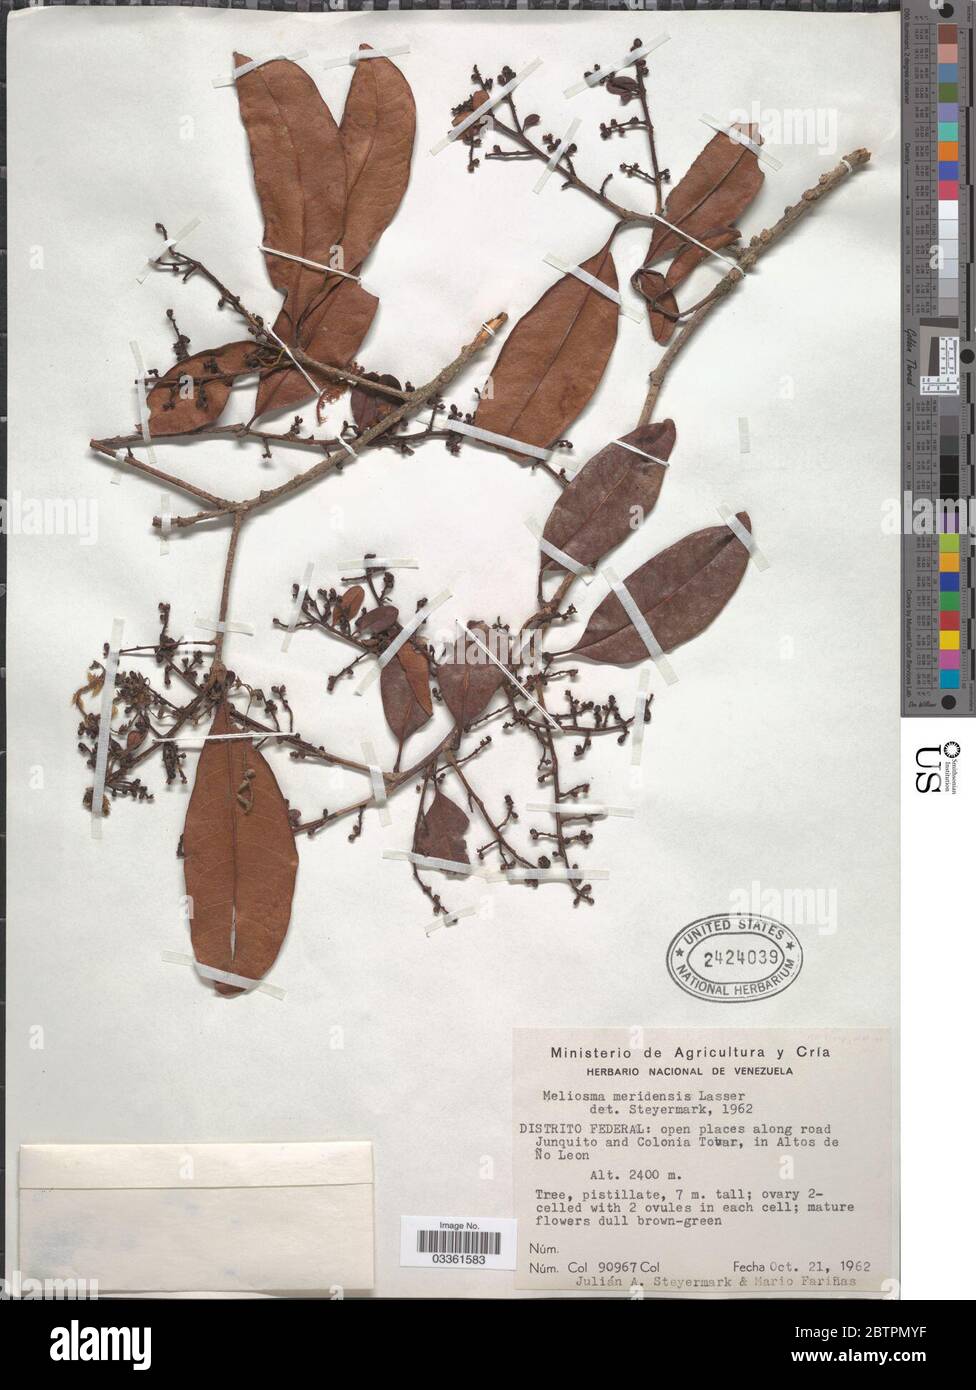 Meliosma meridensis Lasser. Stock Photo